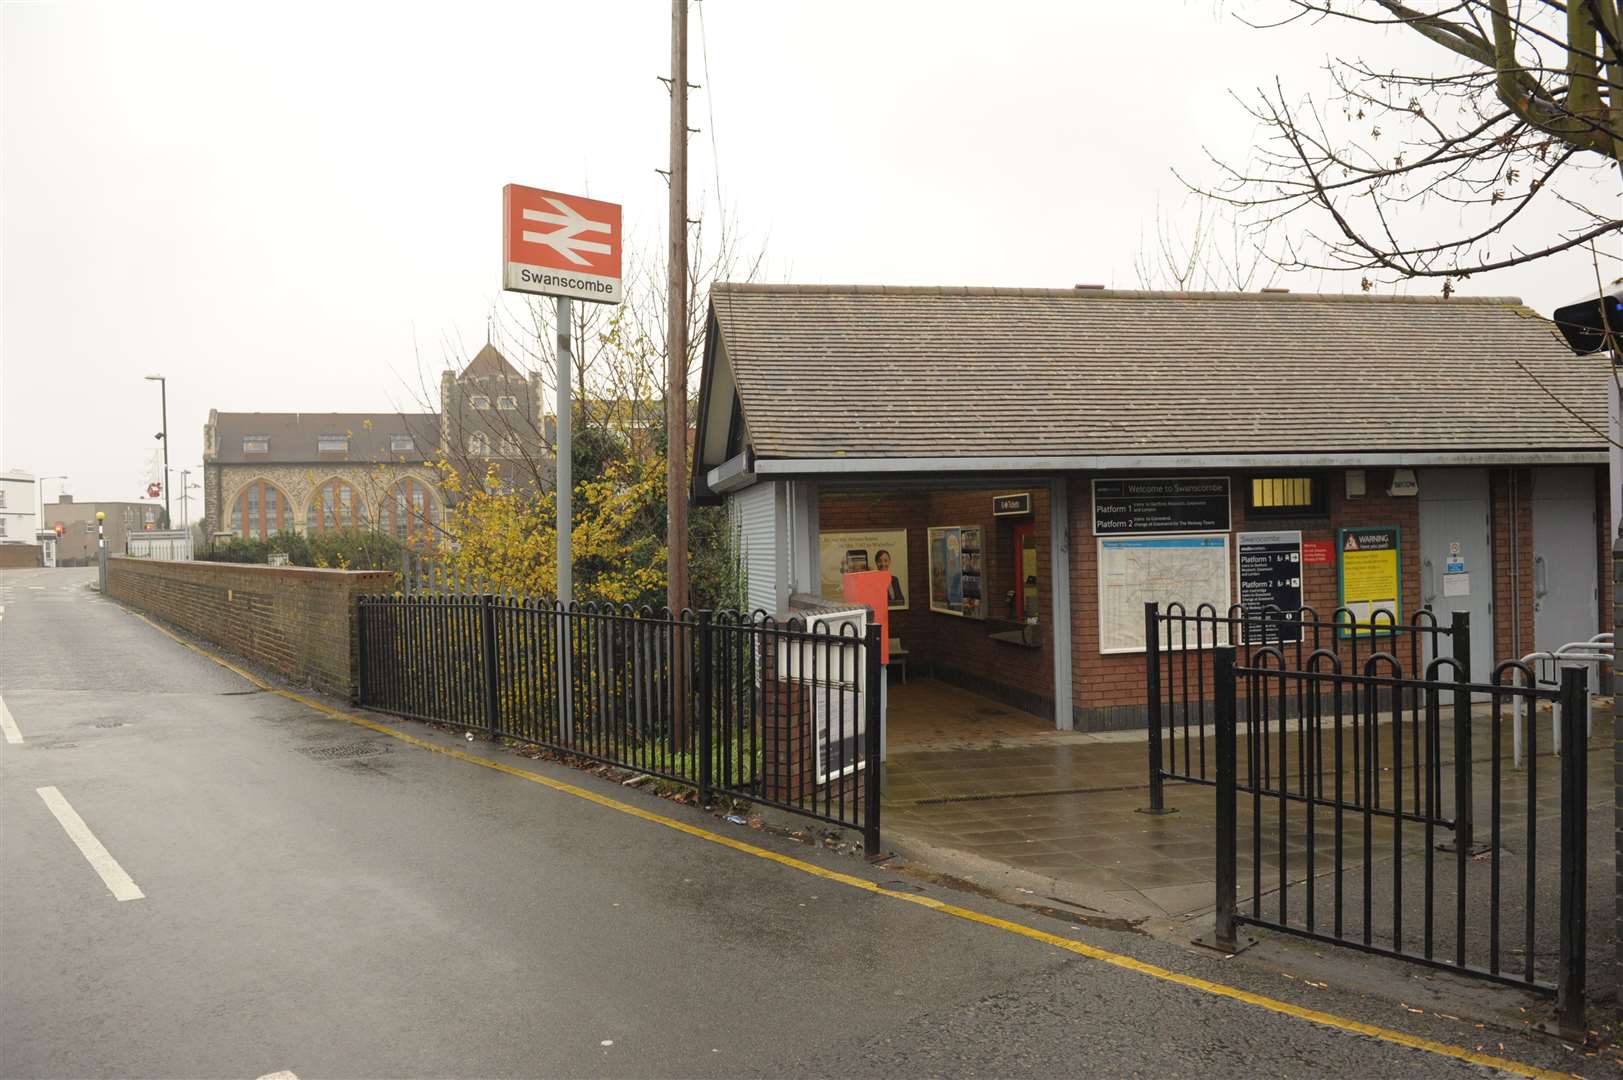 Swanscombe railway station, High Street, Swanscombe